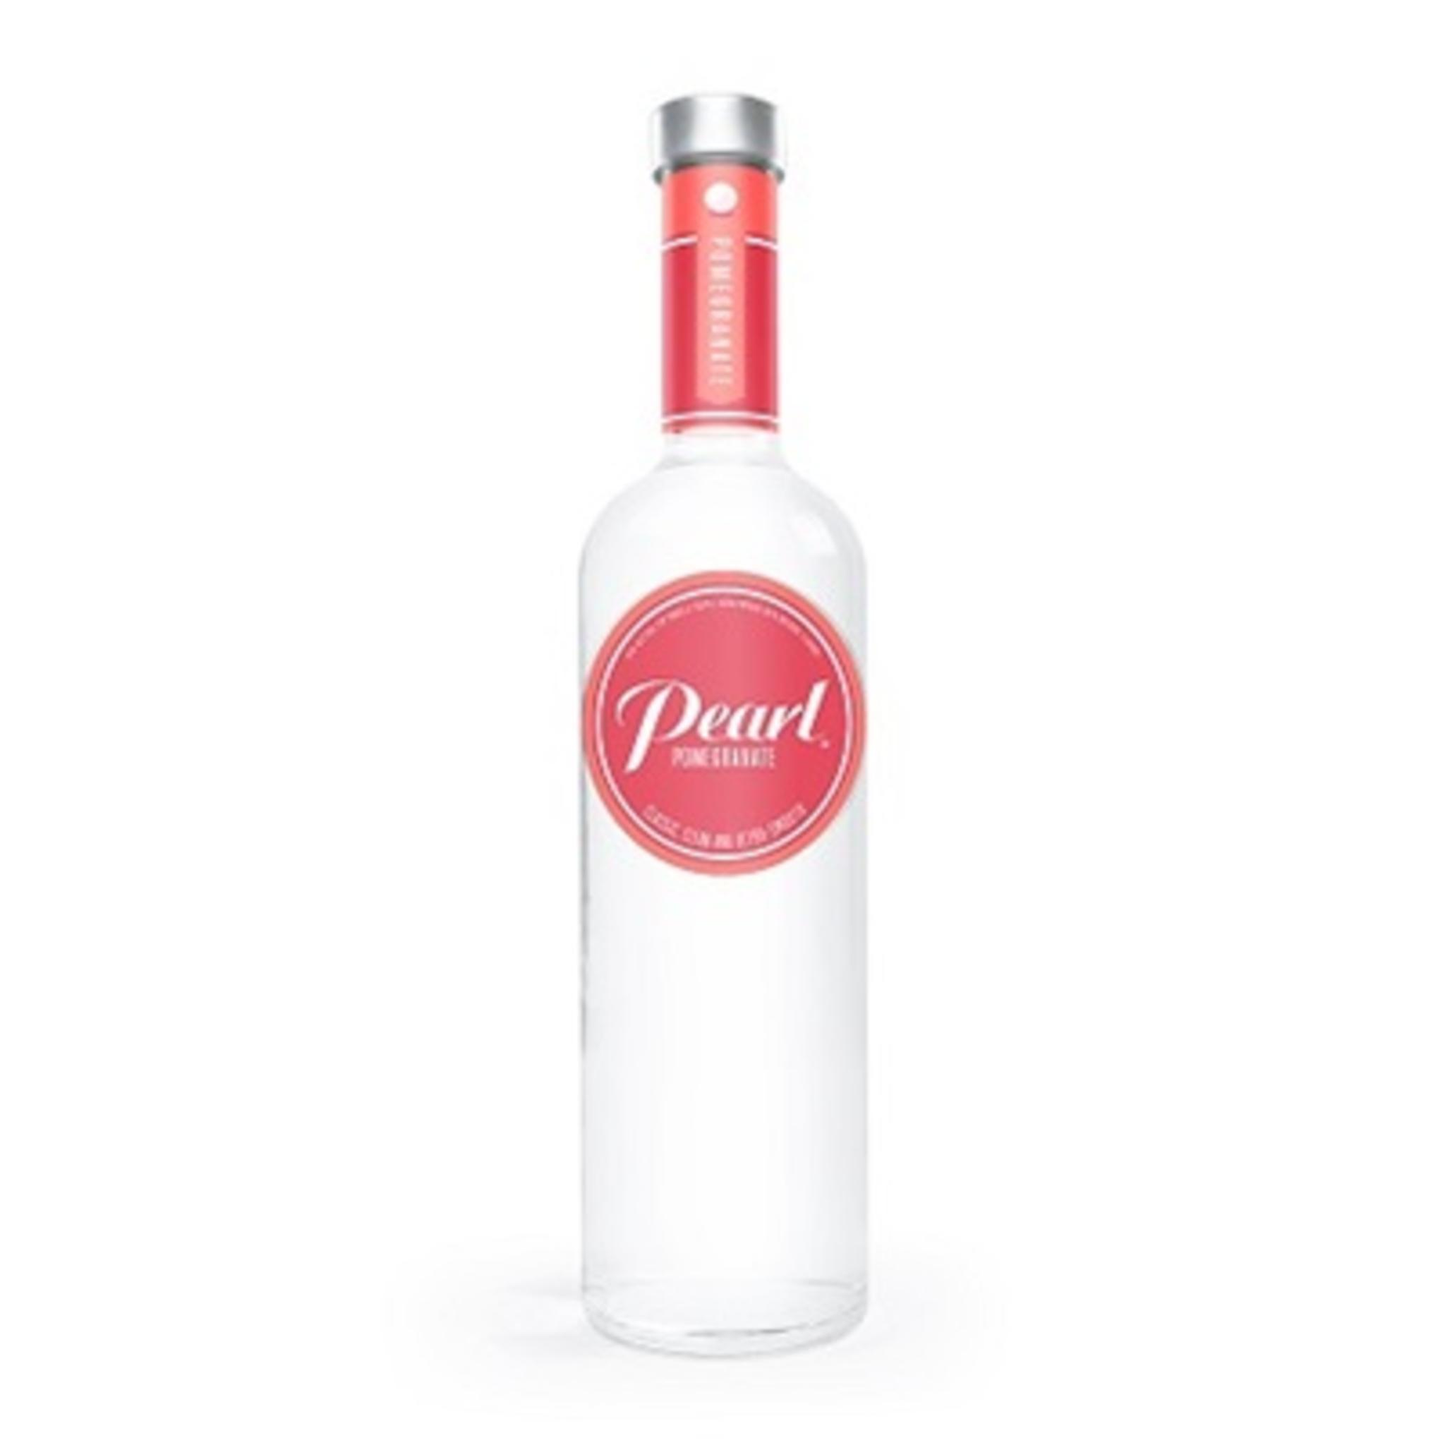 Pearl Pomegranate Vodka - Liquor Geeks